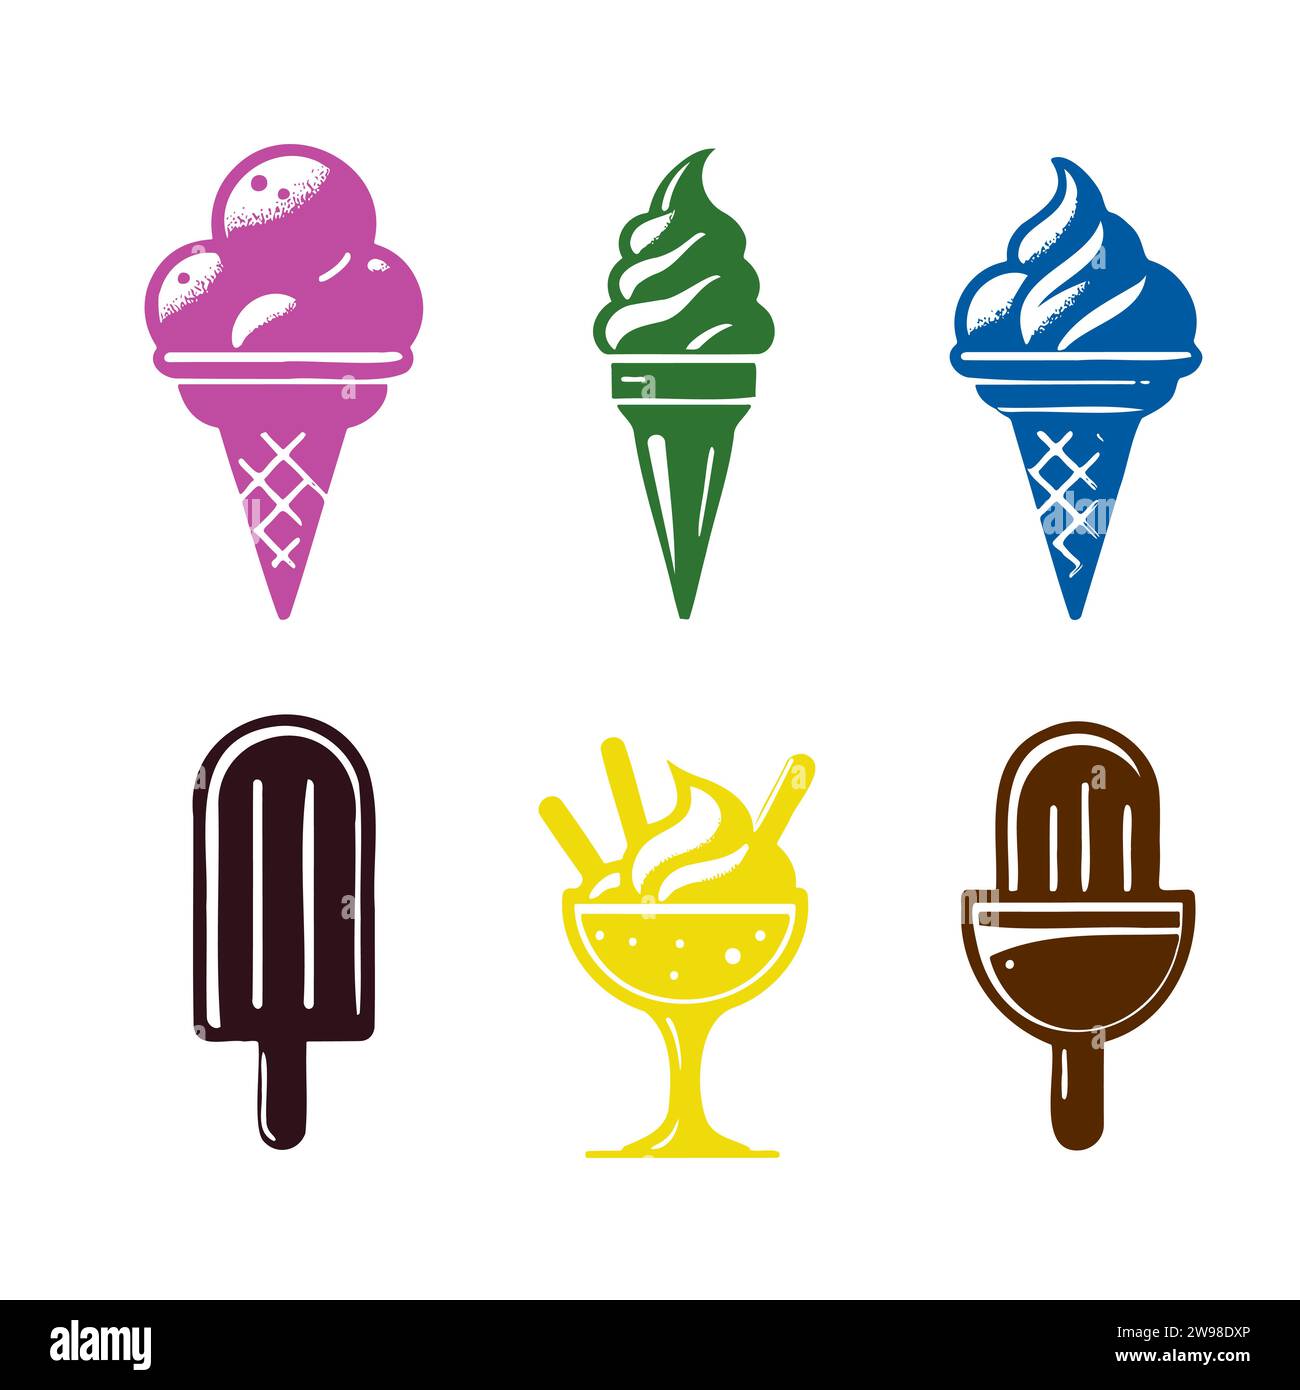 Ice cream scoops with cone stock photo. Image of vanilla - 20015318